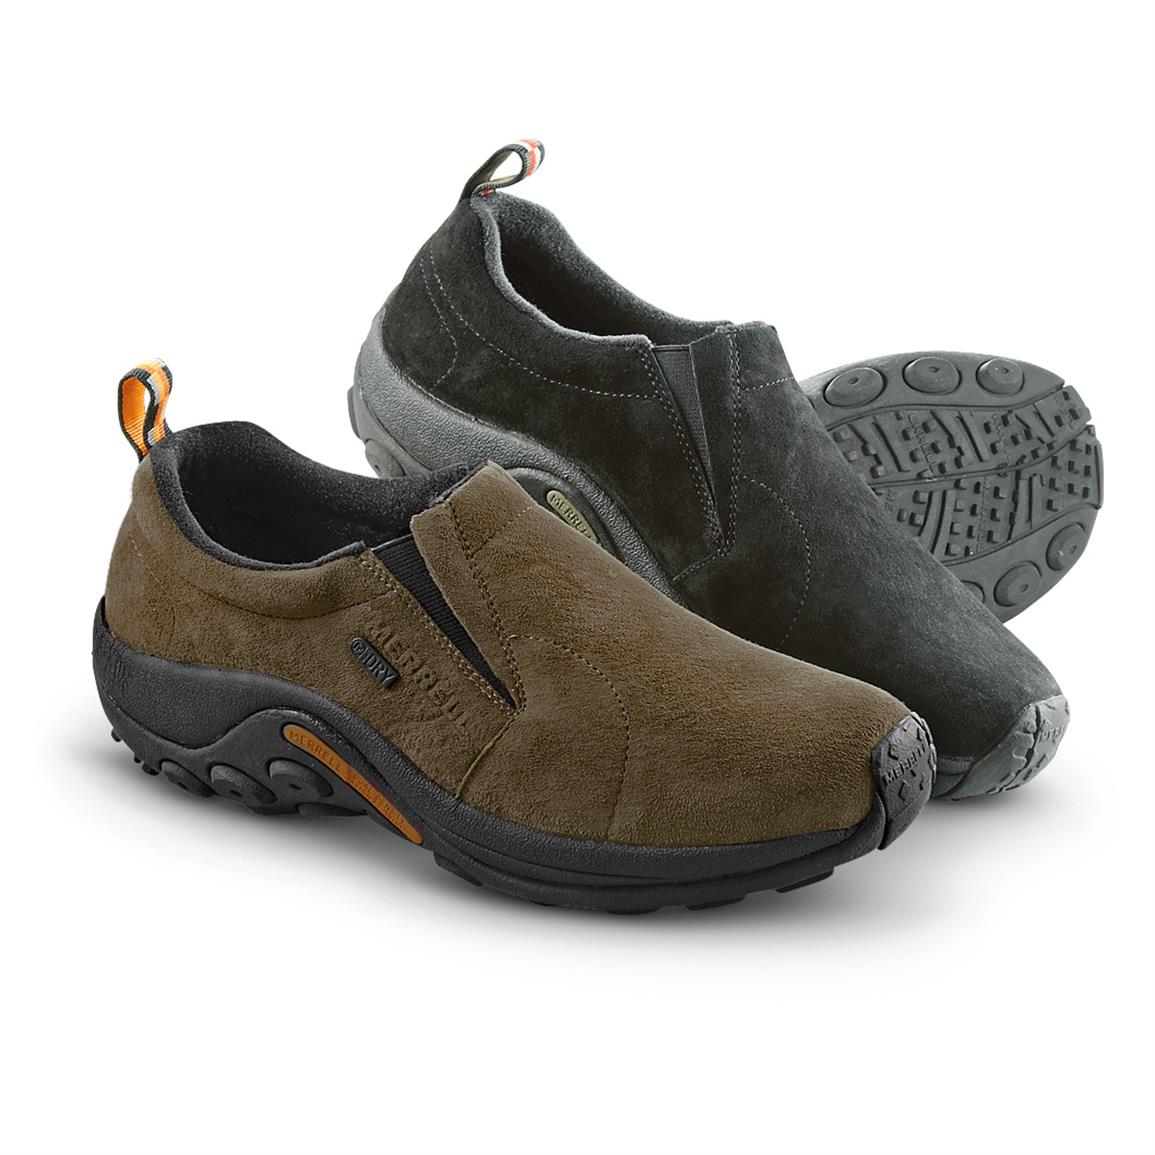 Merrell Men's Jungle Moc Waterproof Slip On Shoes - 425150, Casual ...